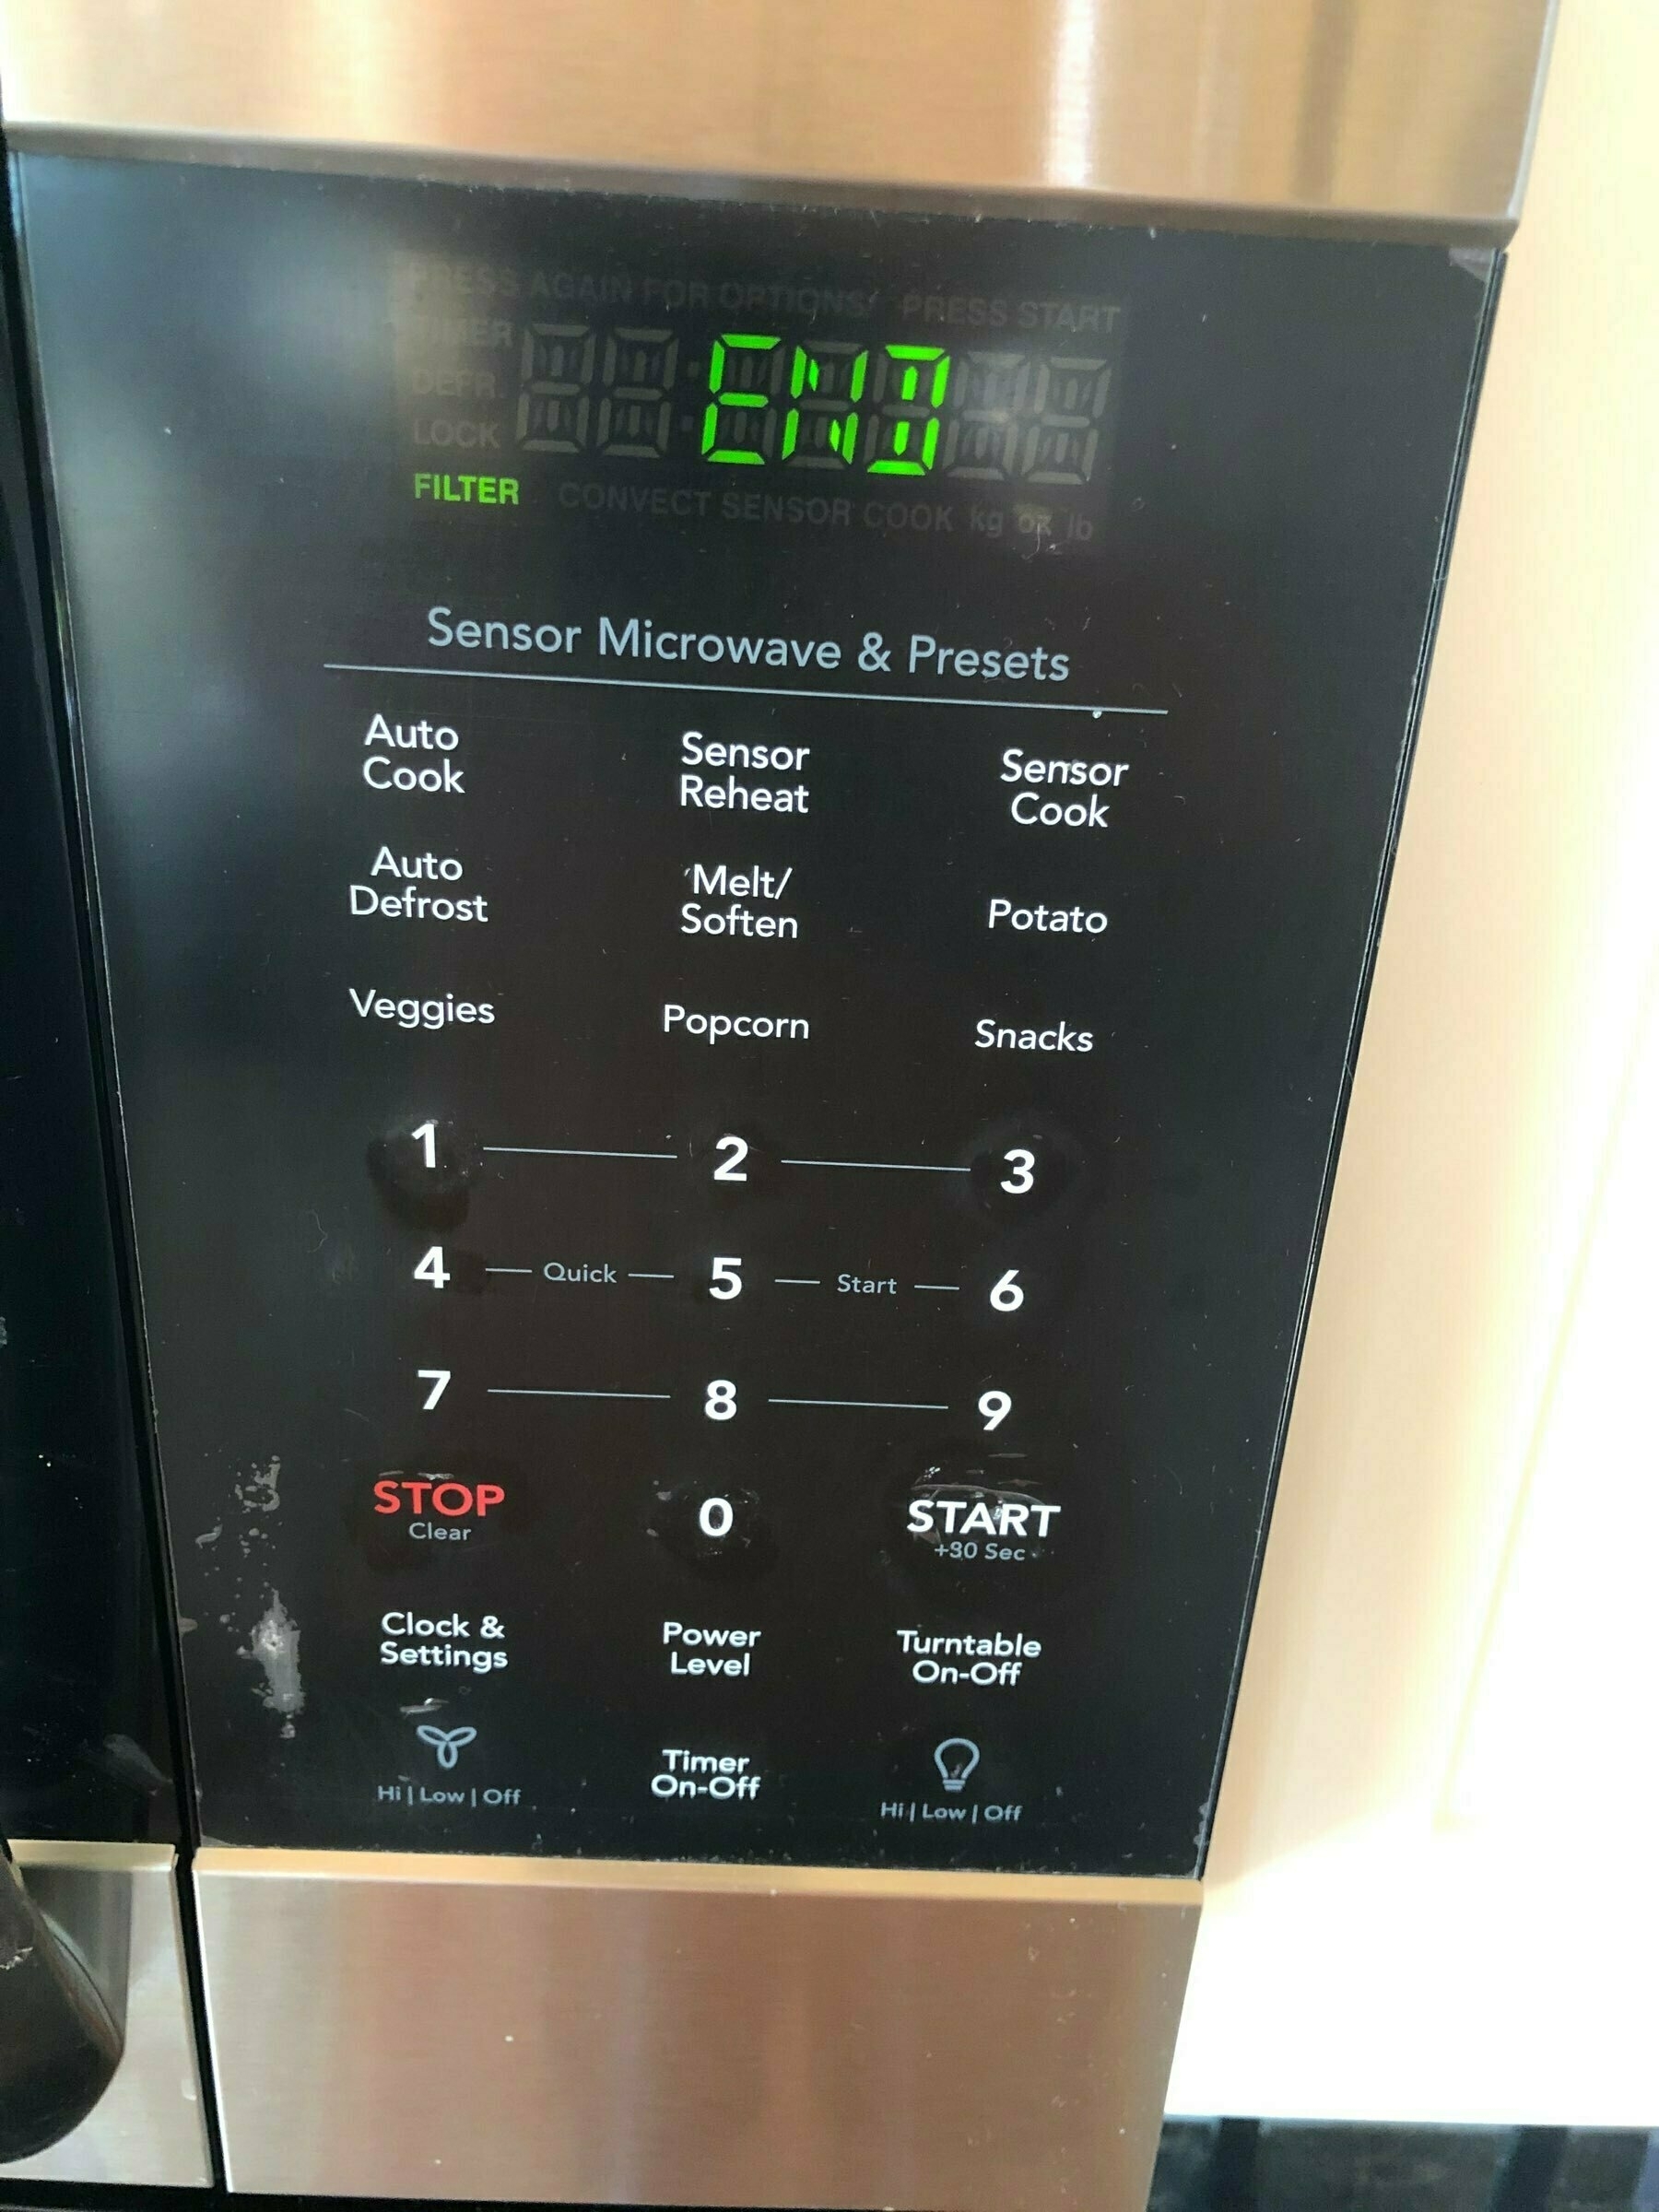 microwave keypad and  digital screen saying "end"